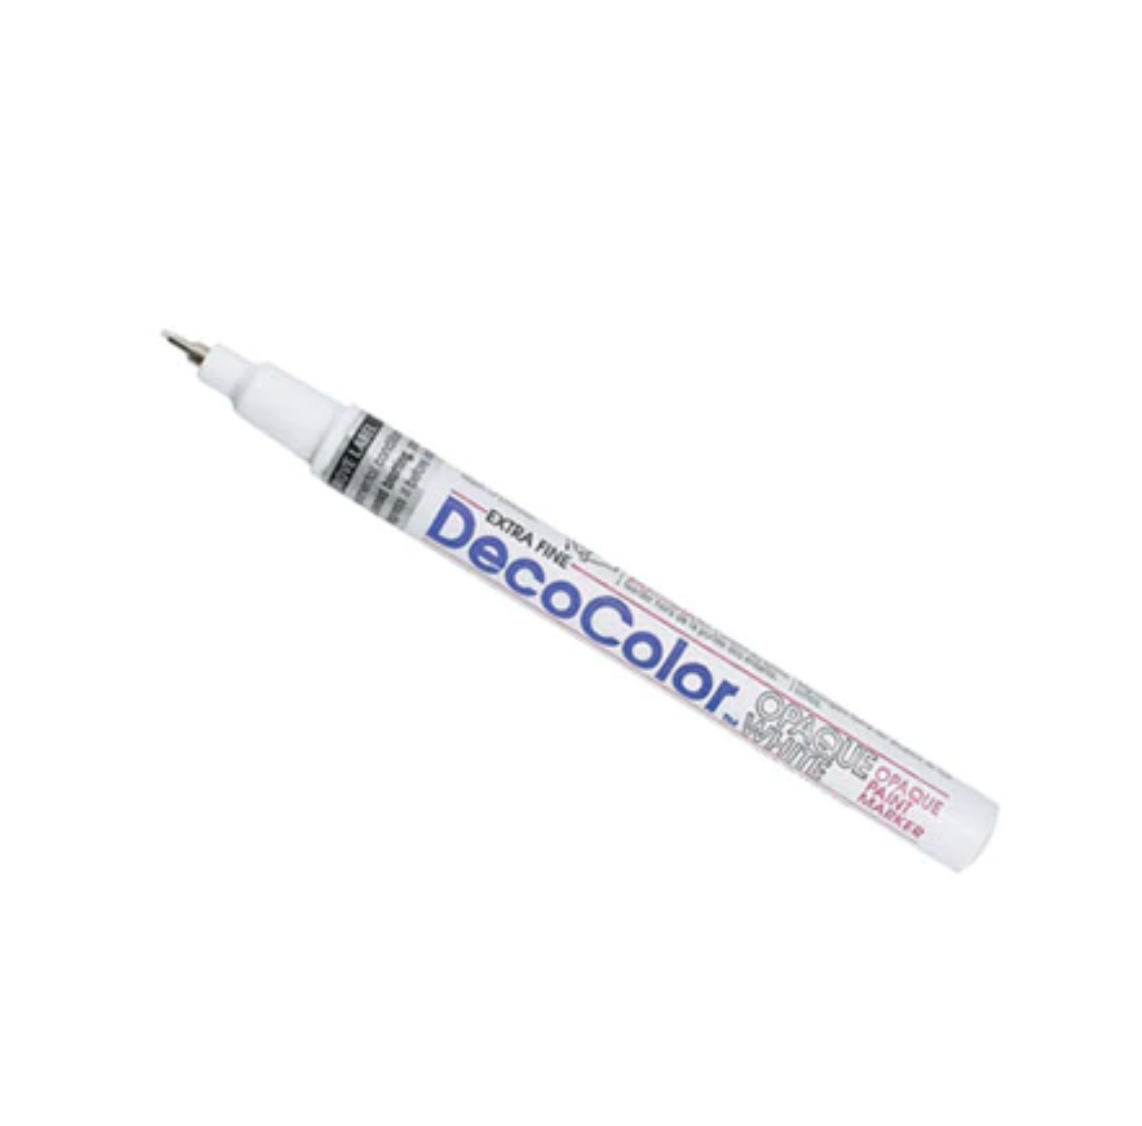 DecoColor Extra Fine Marker